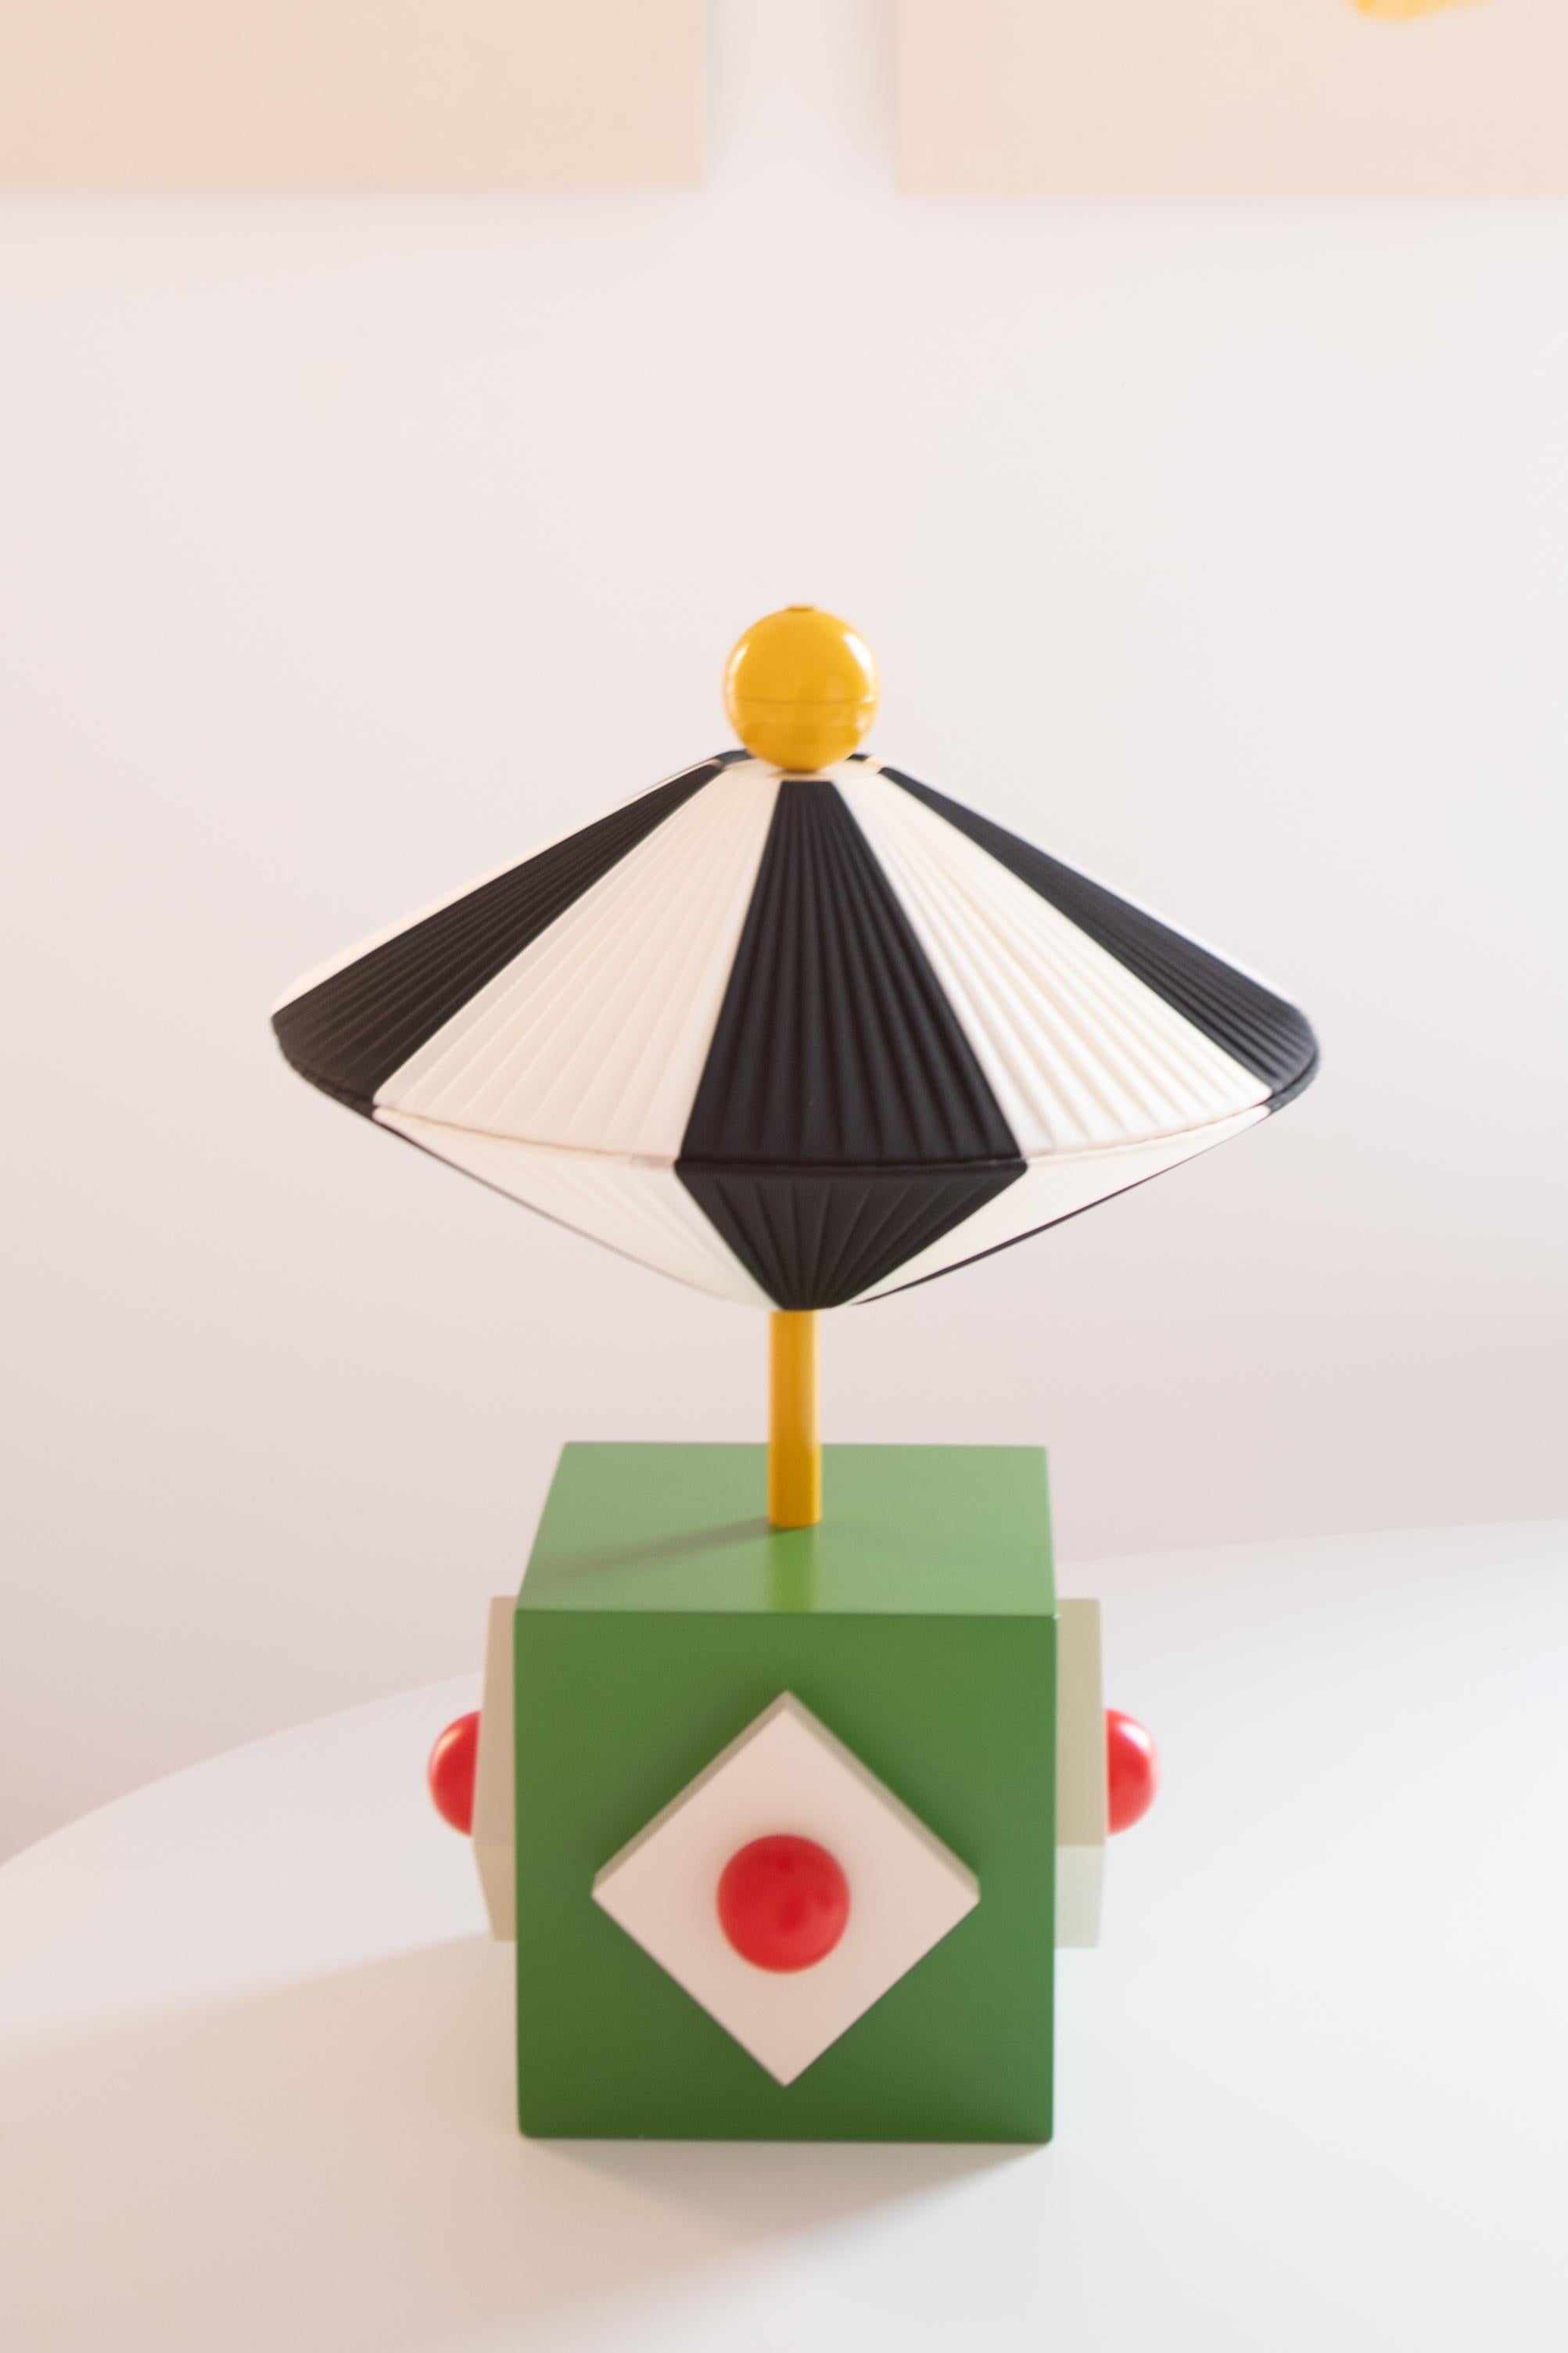 Loop Table Lamp 01 by Miranda Makaroff

W 15.8